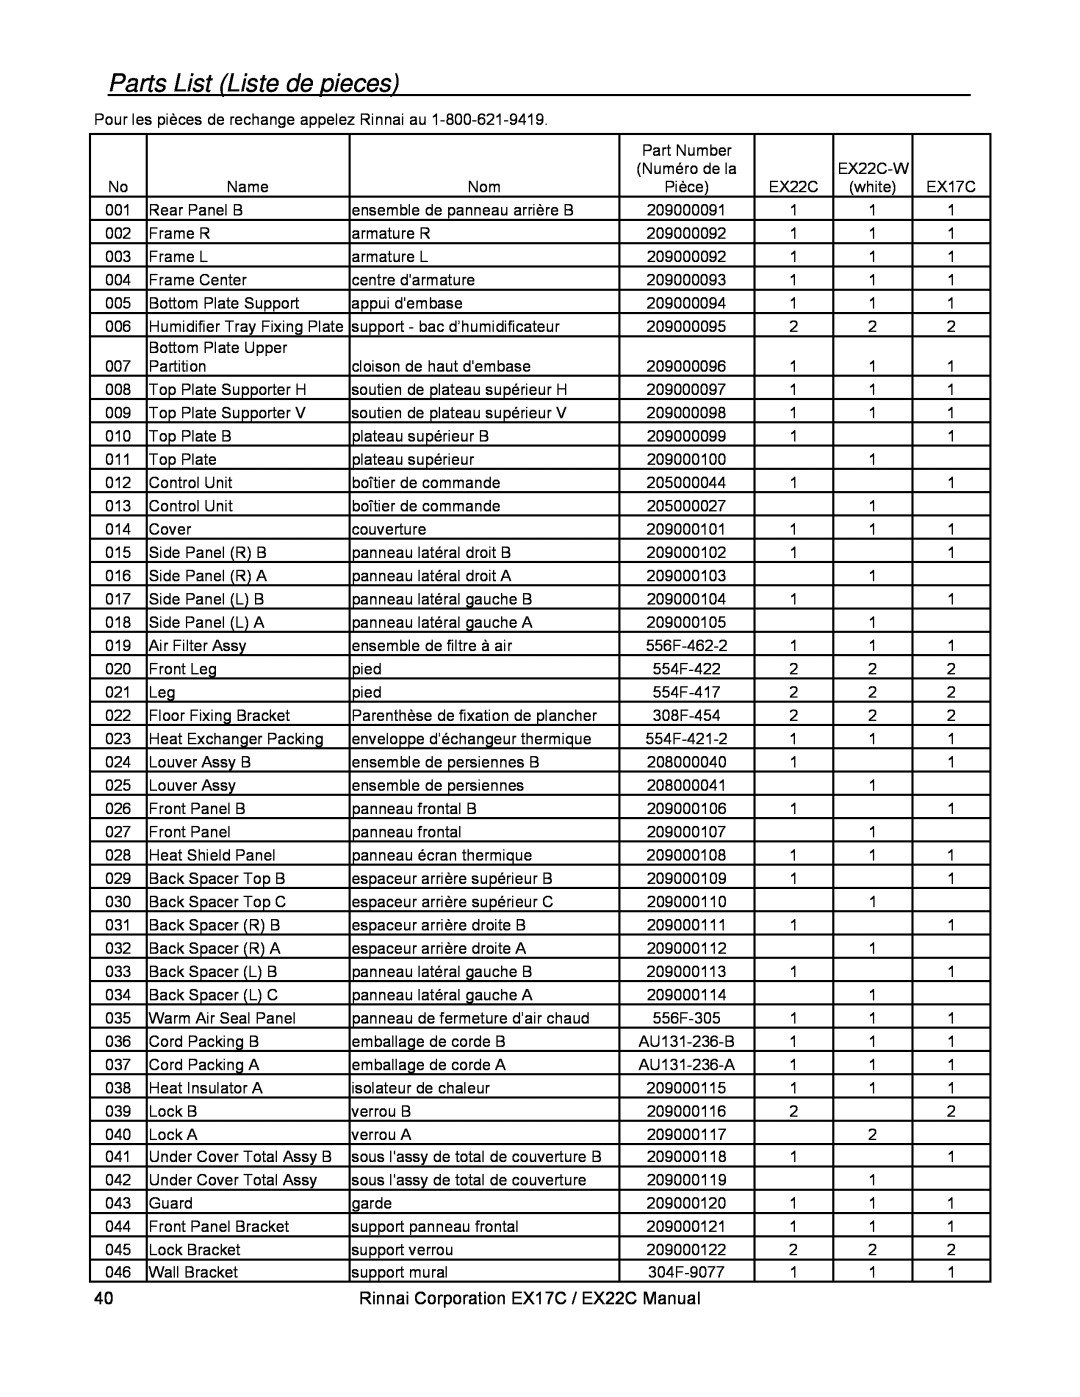 Rinnai installation manual Parts List Liste de pieces, Rinnai Corporation EX17C / EX22C Manual 